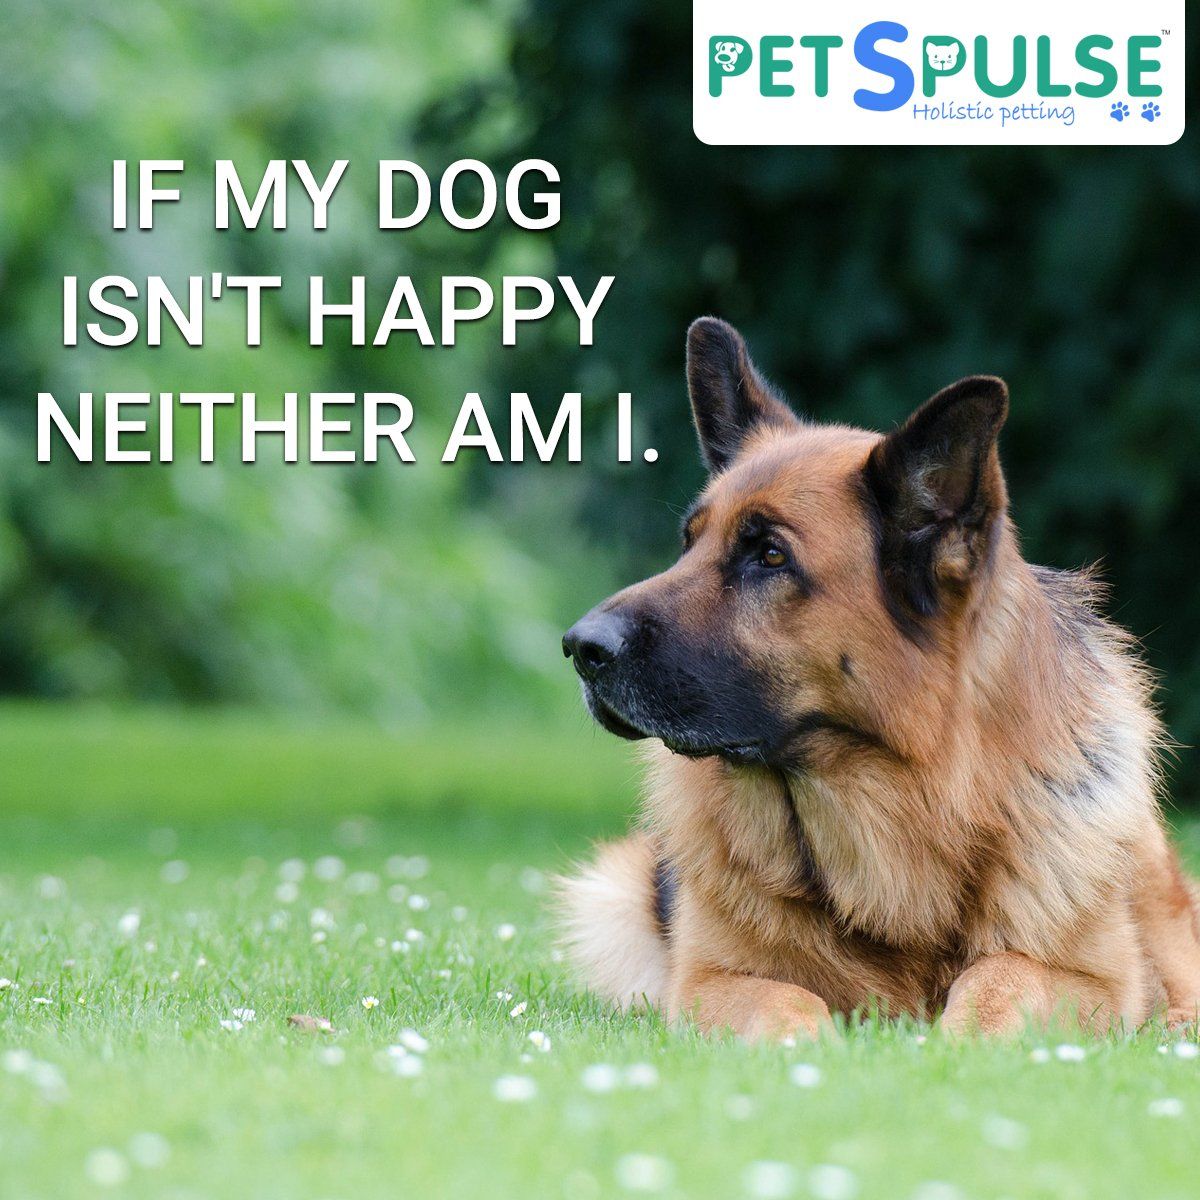 Pets Pulse on Twitter